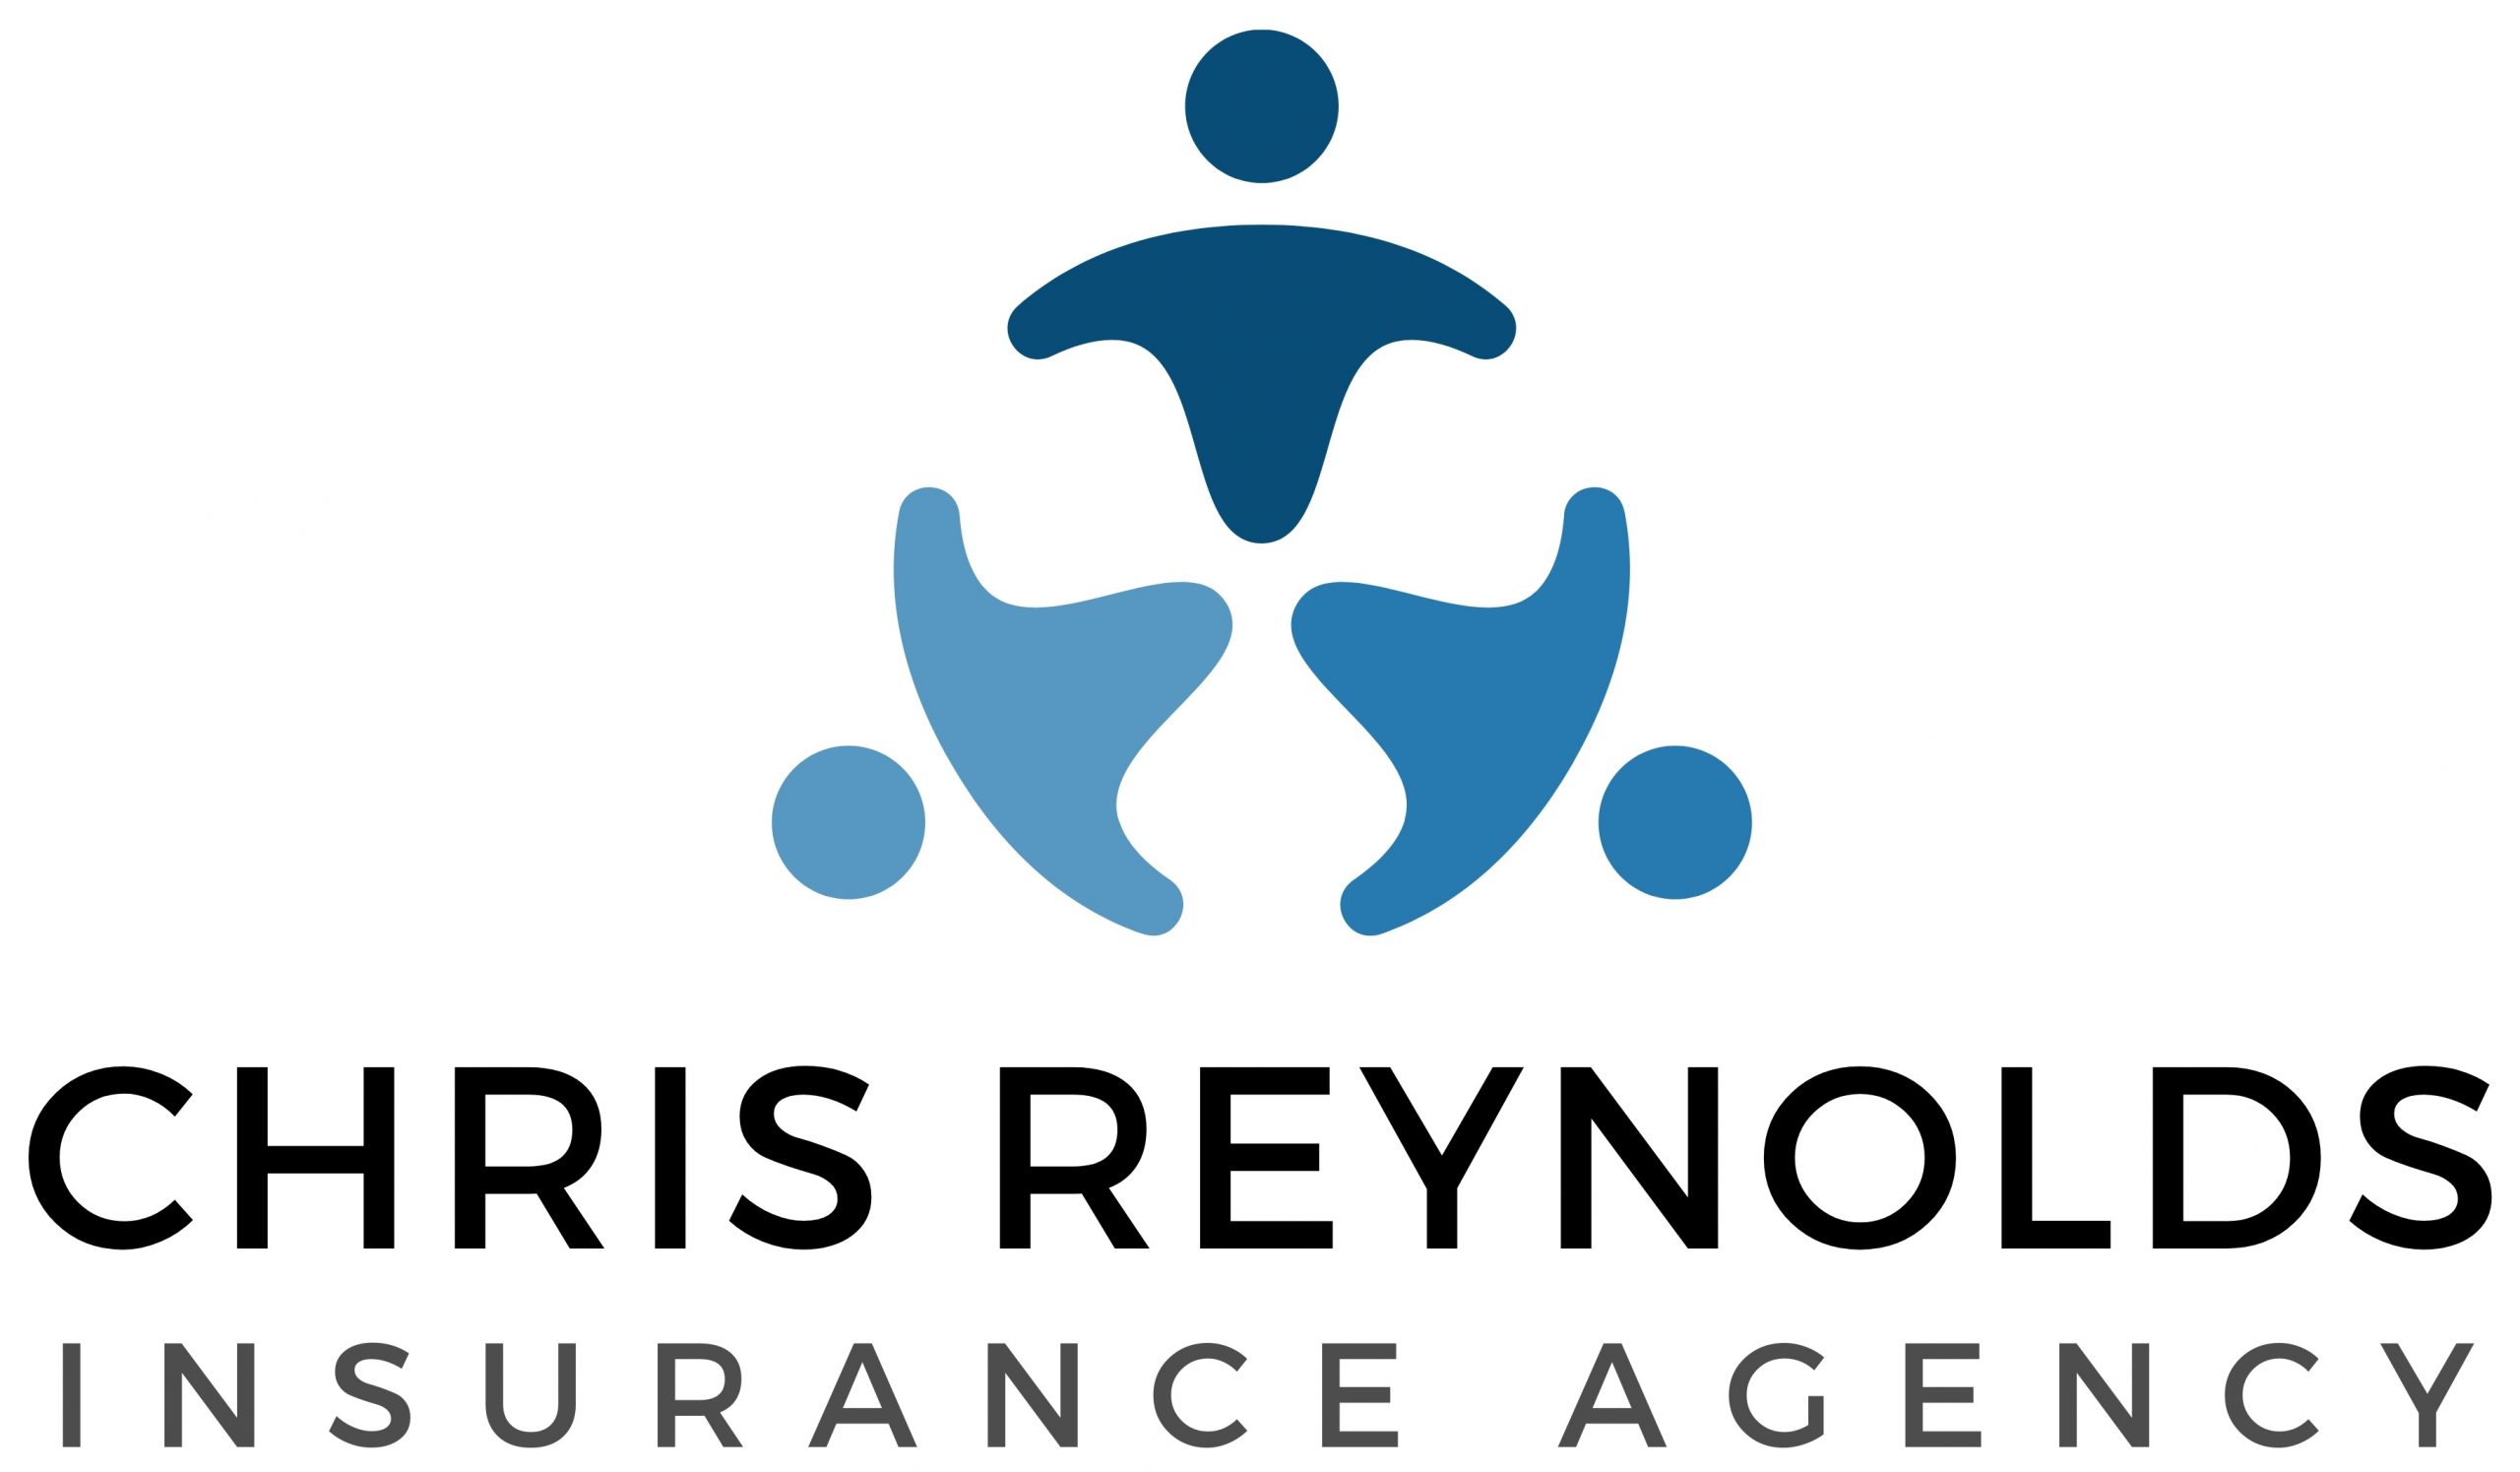 Chris Reynolds Insurance Agency